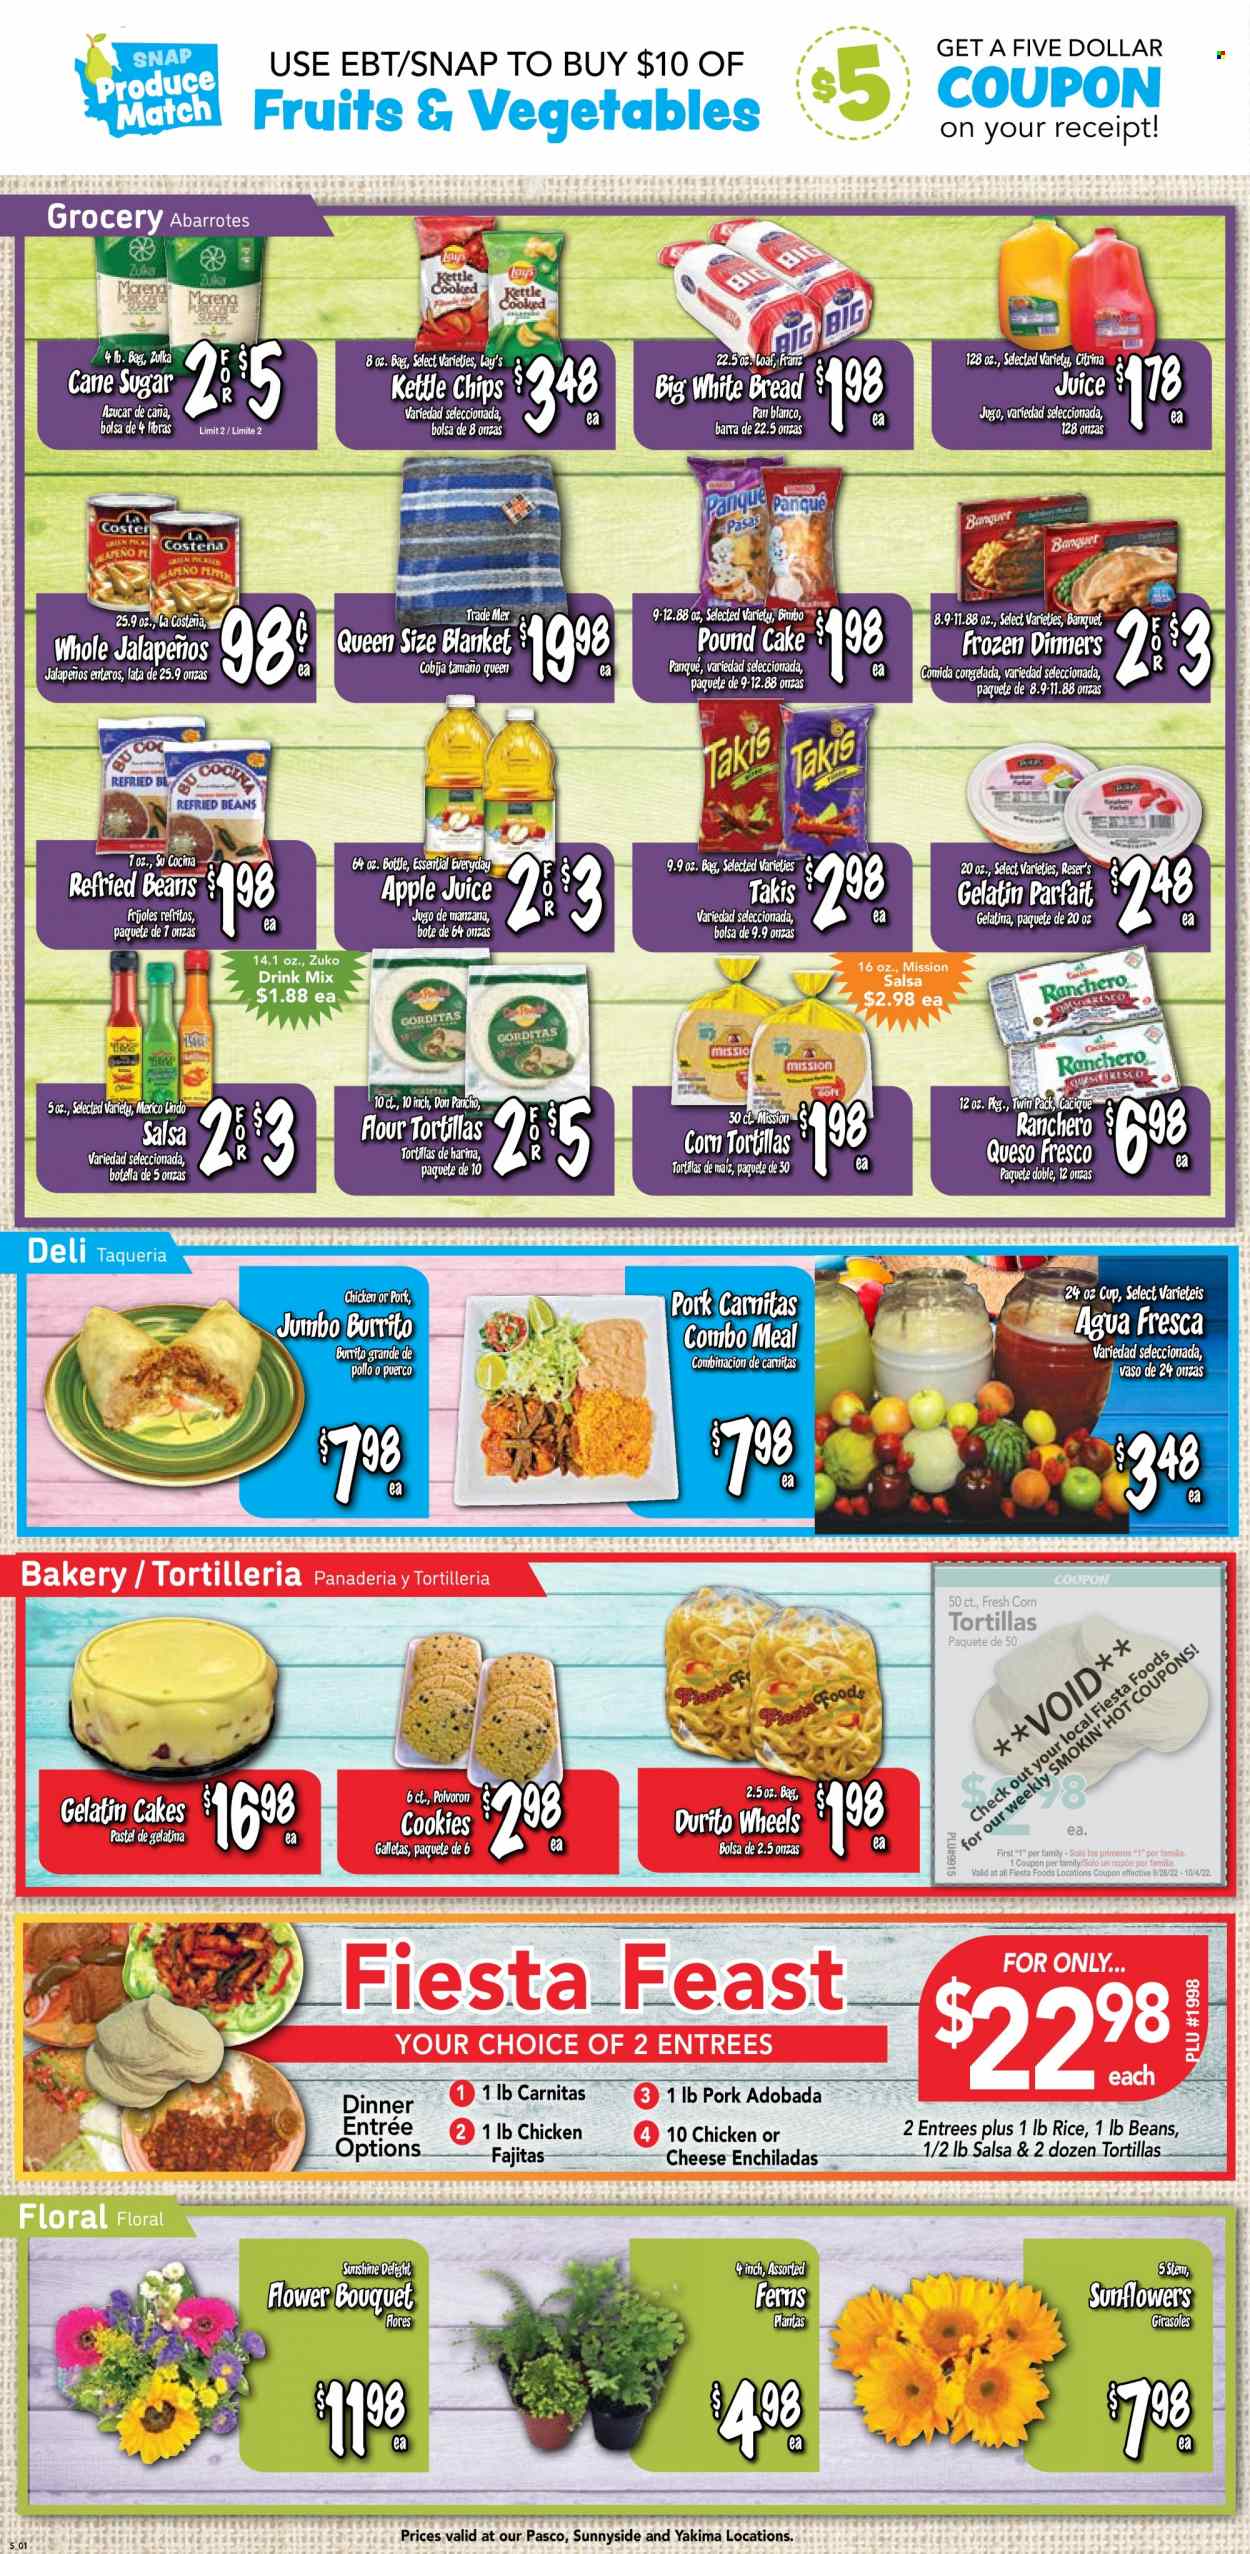 thumbnail - Fiesta Foods SuperMarkets Flyer - 09/28/2022 - 10/04/2022 - Sales products - bread, corn tortillas, tortillas, white bread, cake, flour tortillas, pound cake, enchiladas, fajita, burrito, queso fresco, Sunshine, cookies, Lay’s, cane sugar, sugar, refried beans, rice, salsa, apple juice, juice. Page 2.